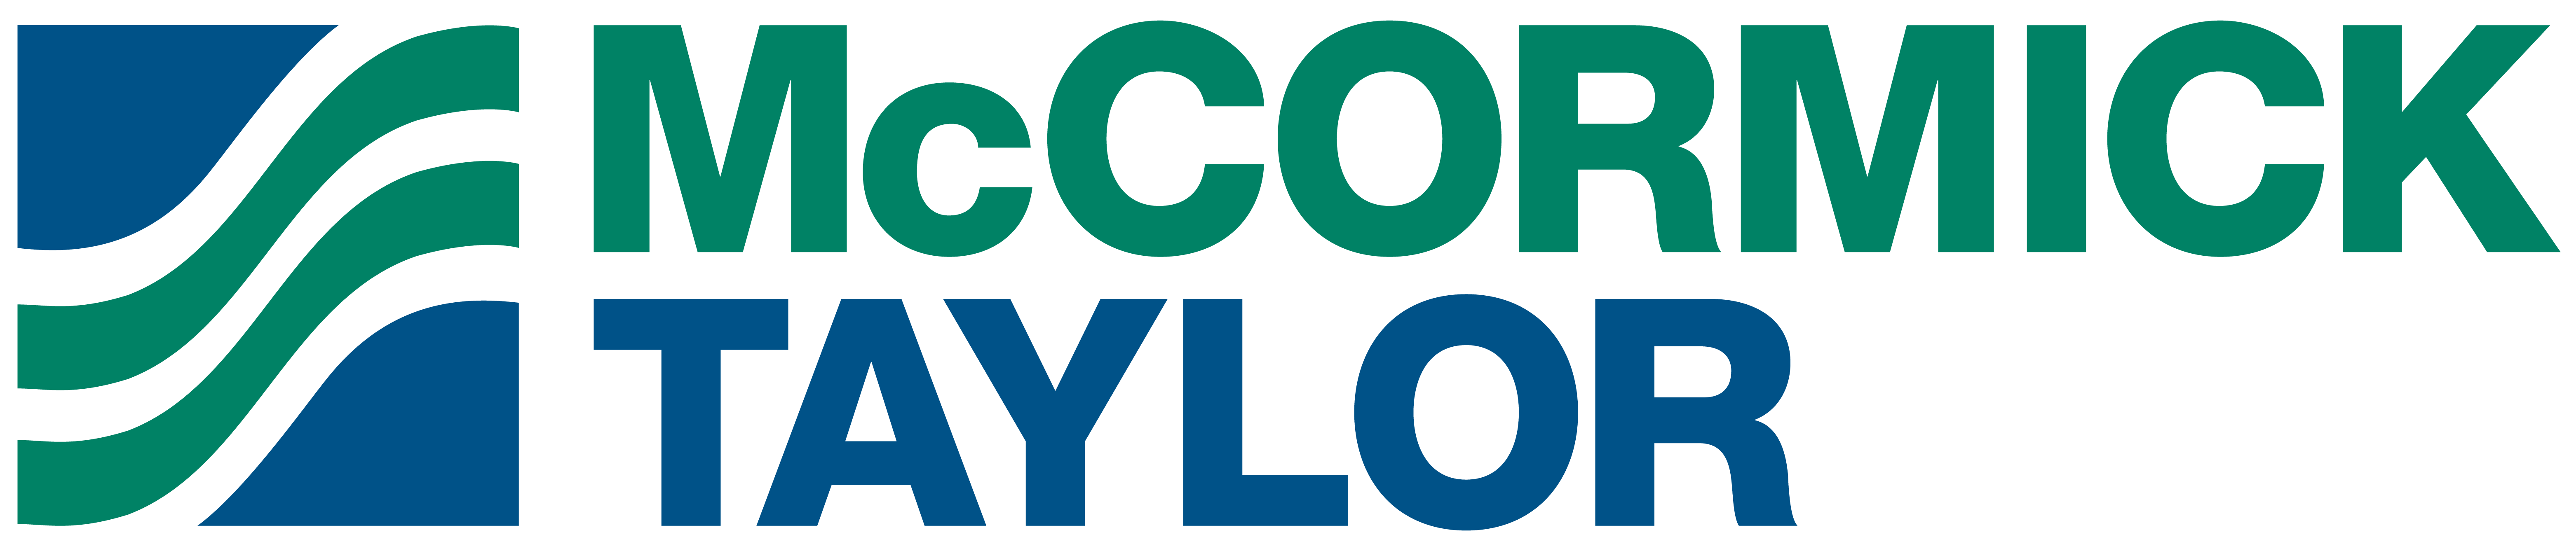 McCormick Taylor, Inc. logo